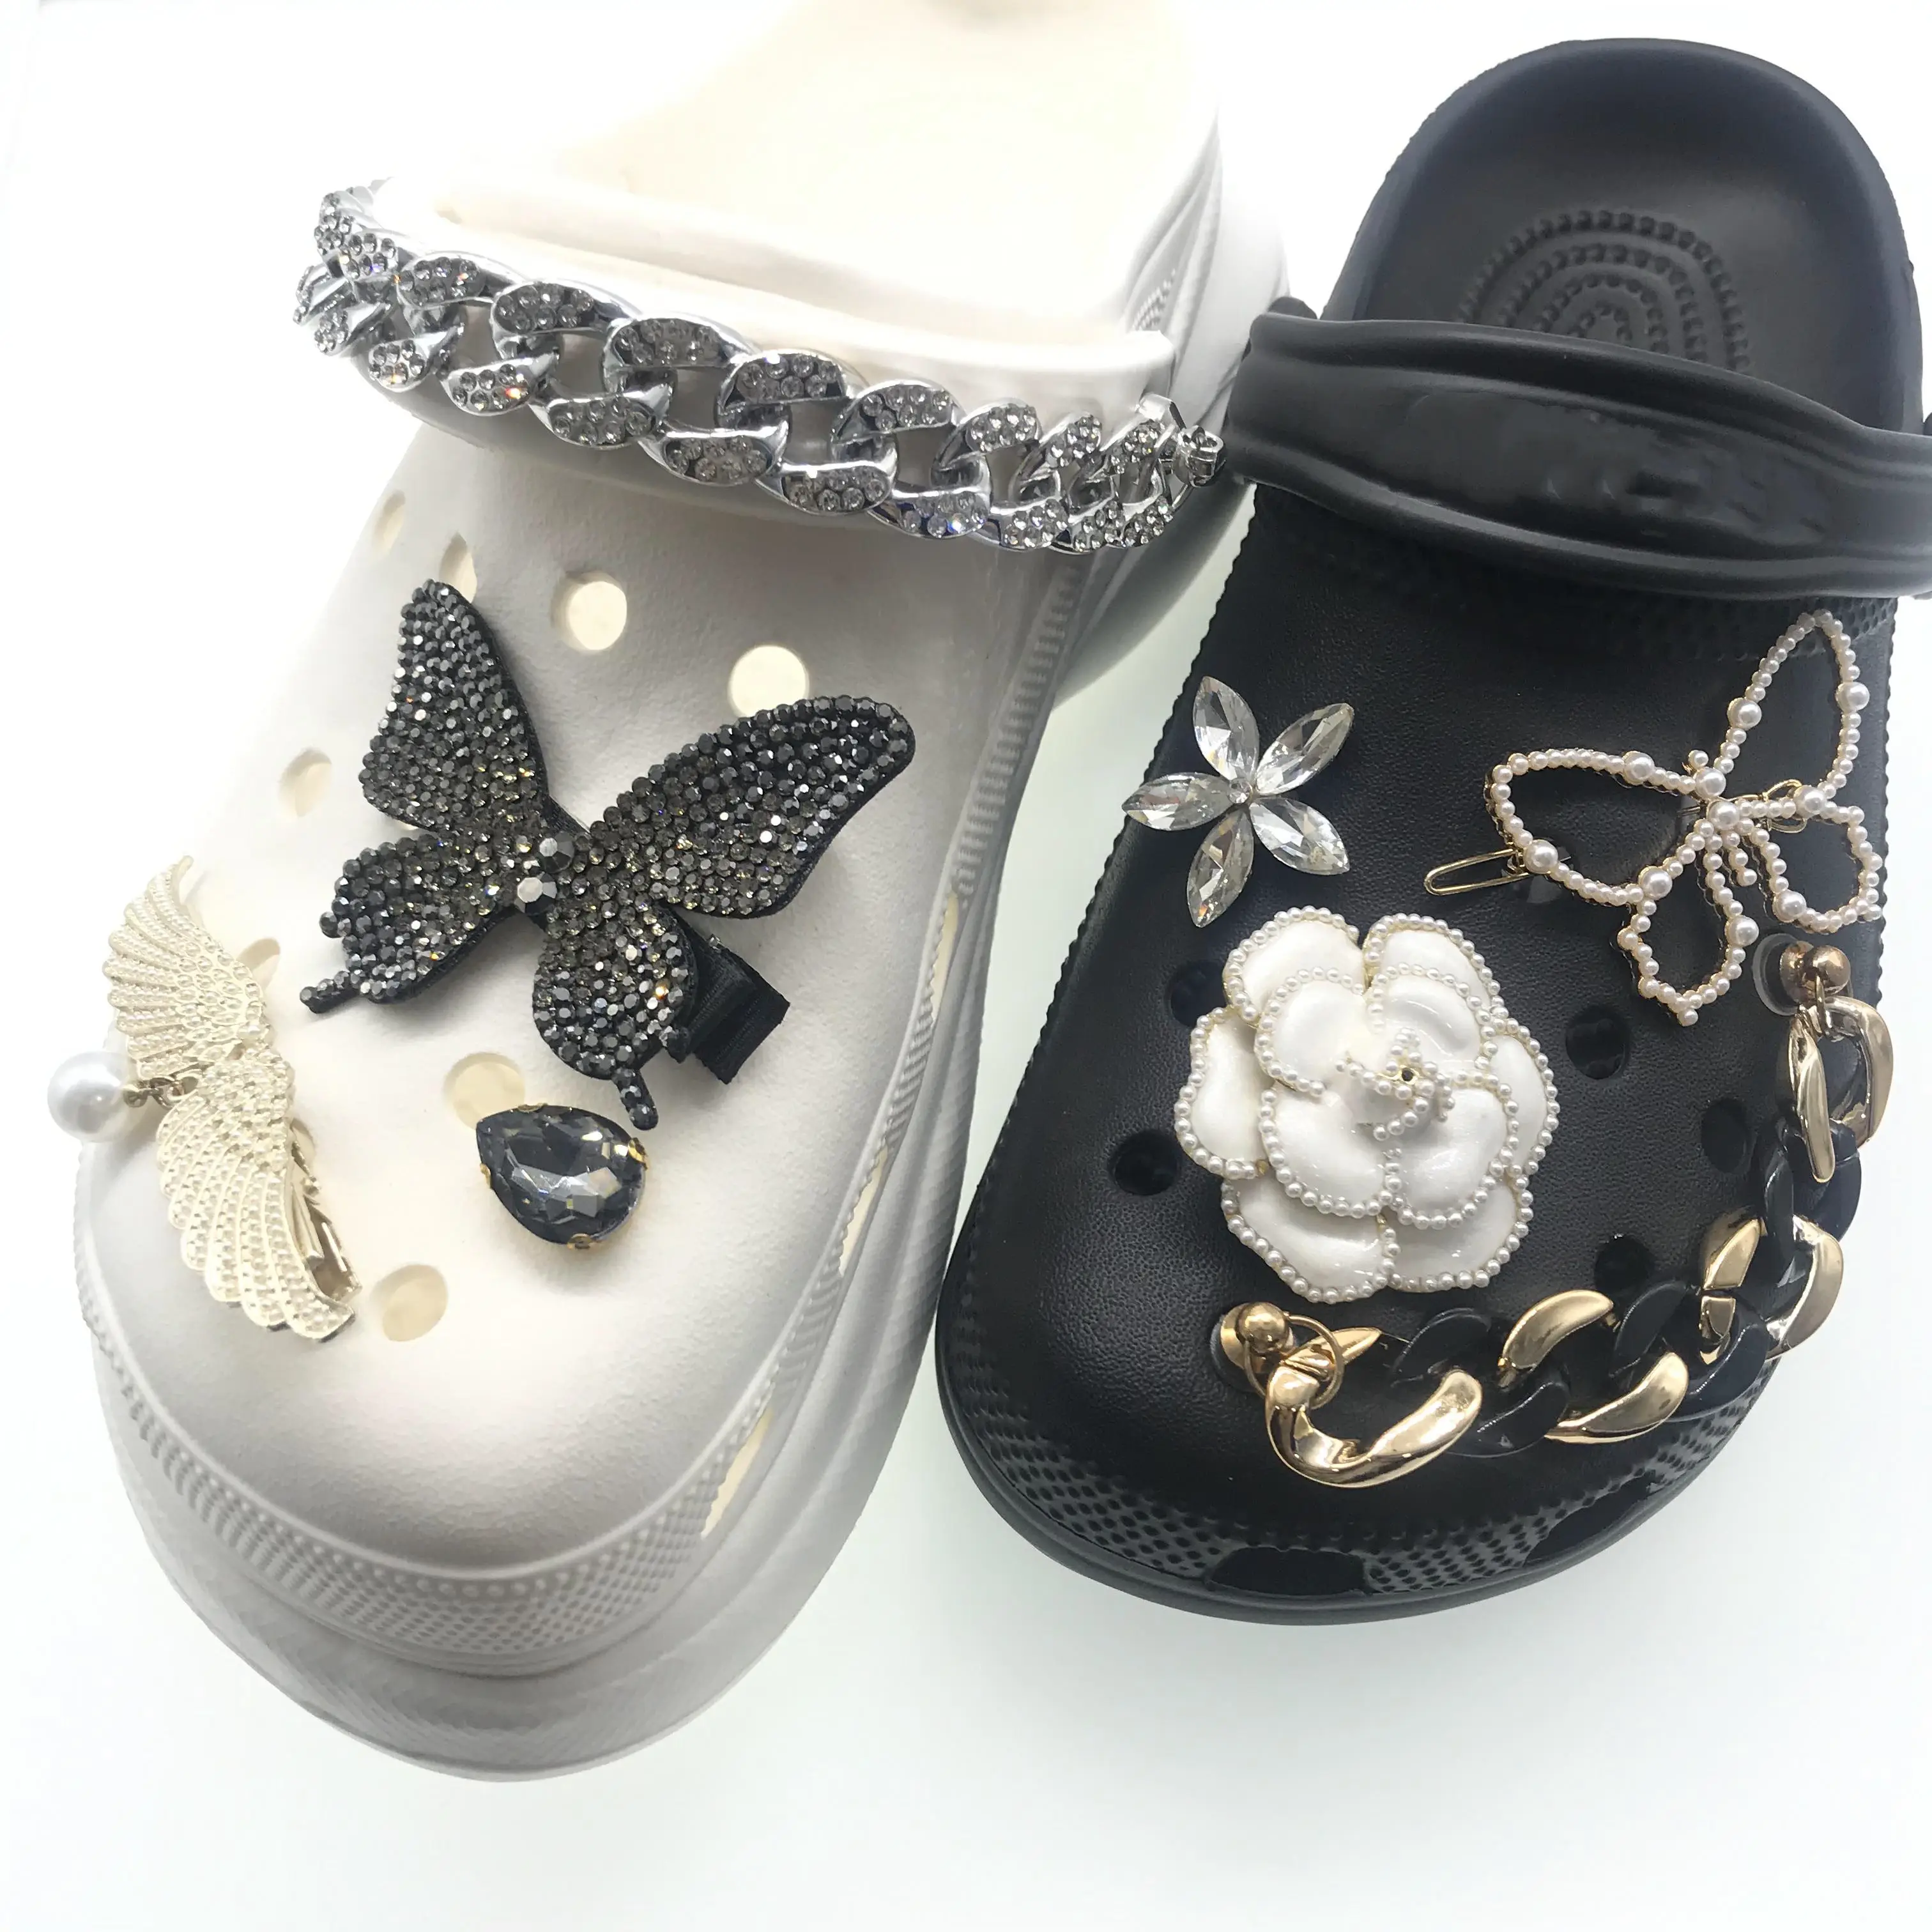 Los fabricantes directos más nuevos que venden DIY zuecos decoración de zapatos Bling encantos para zuecos alfileres para zapatos broche horquilla